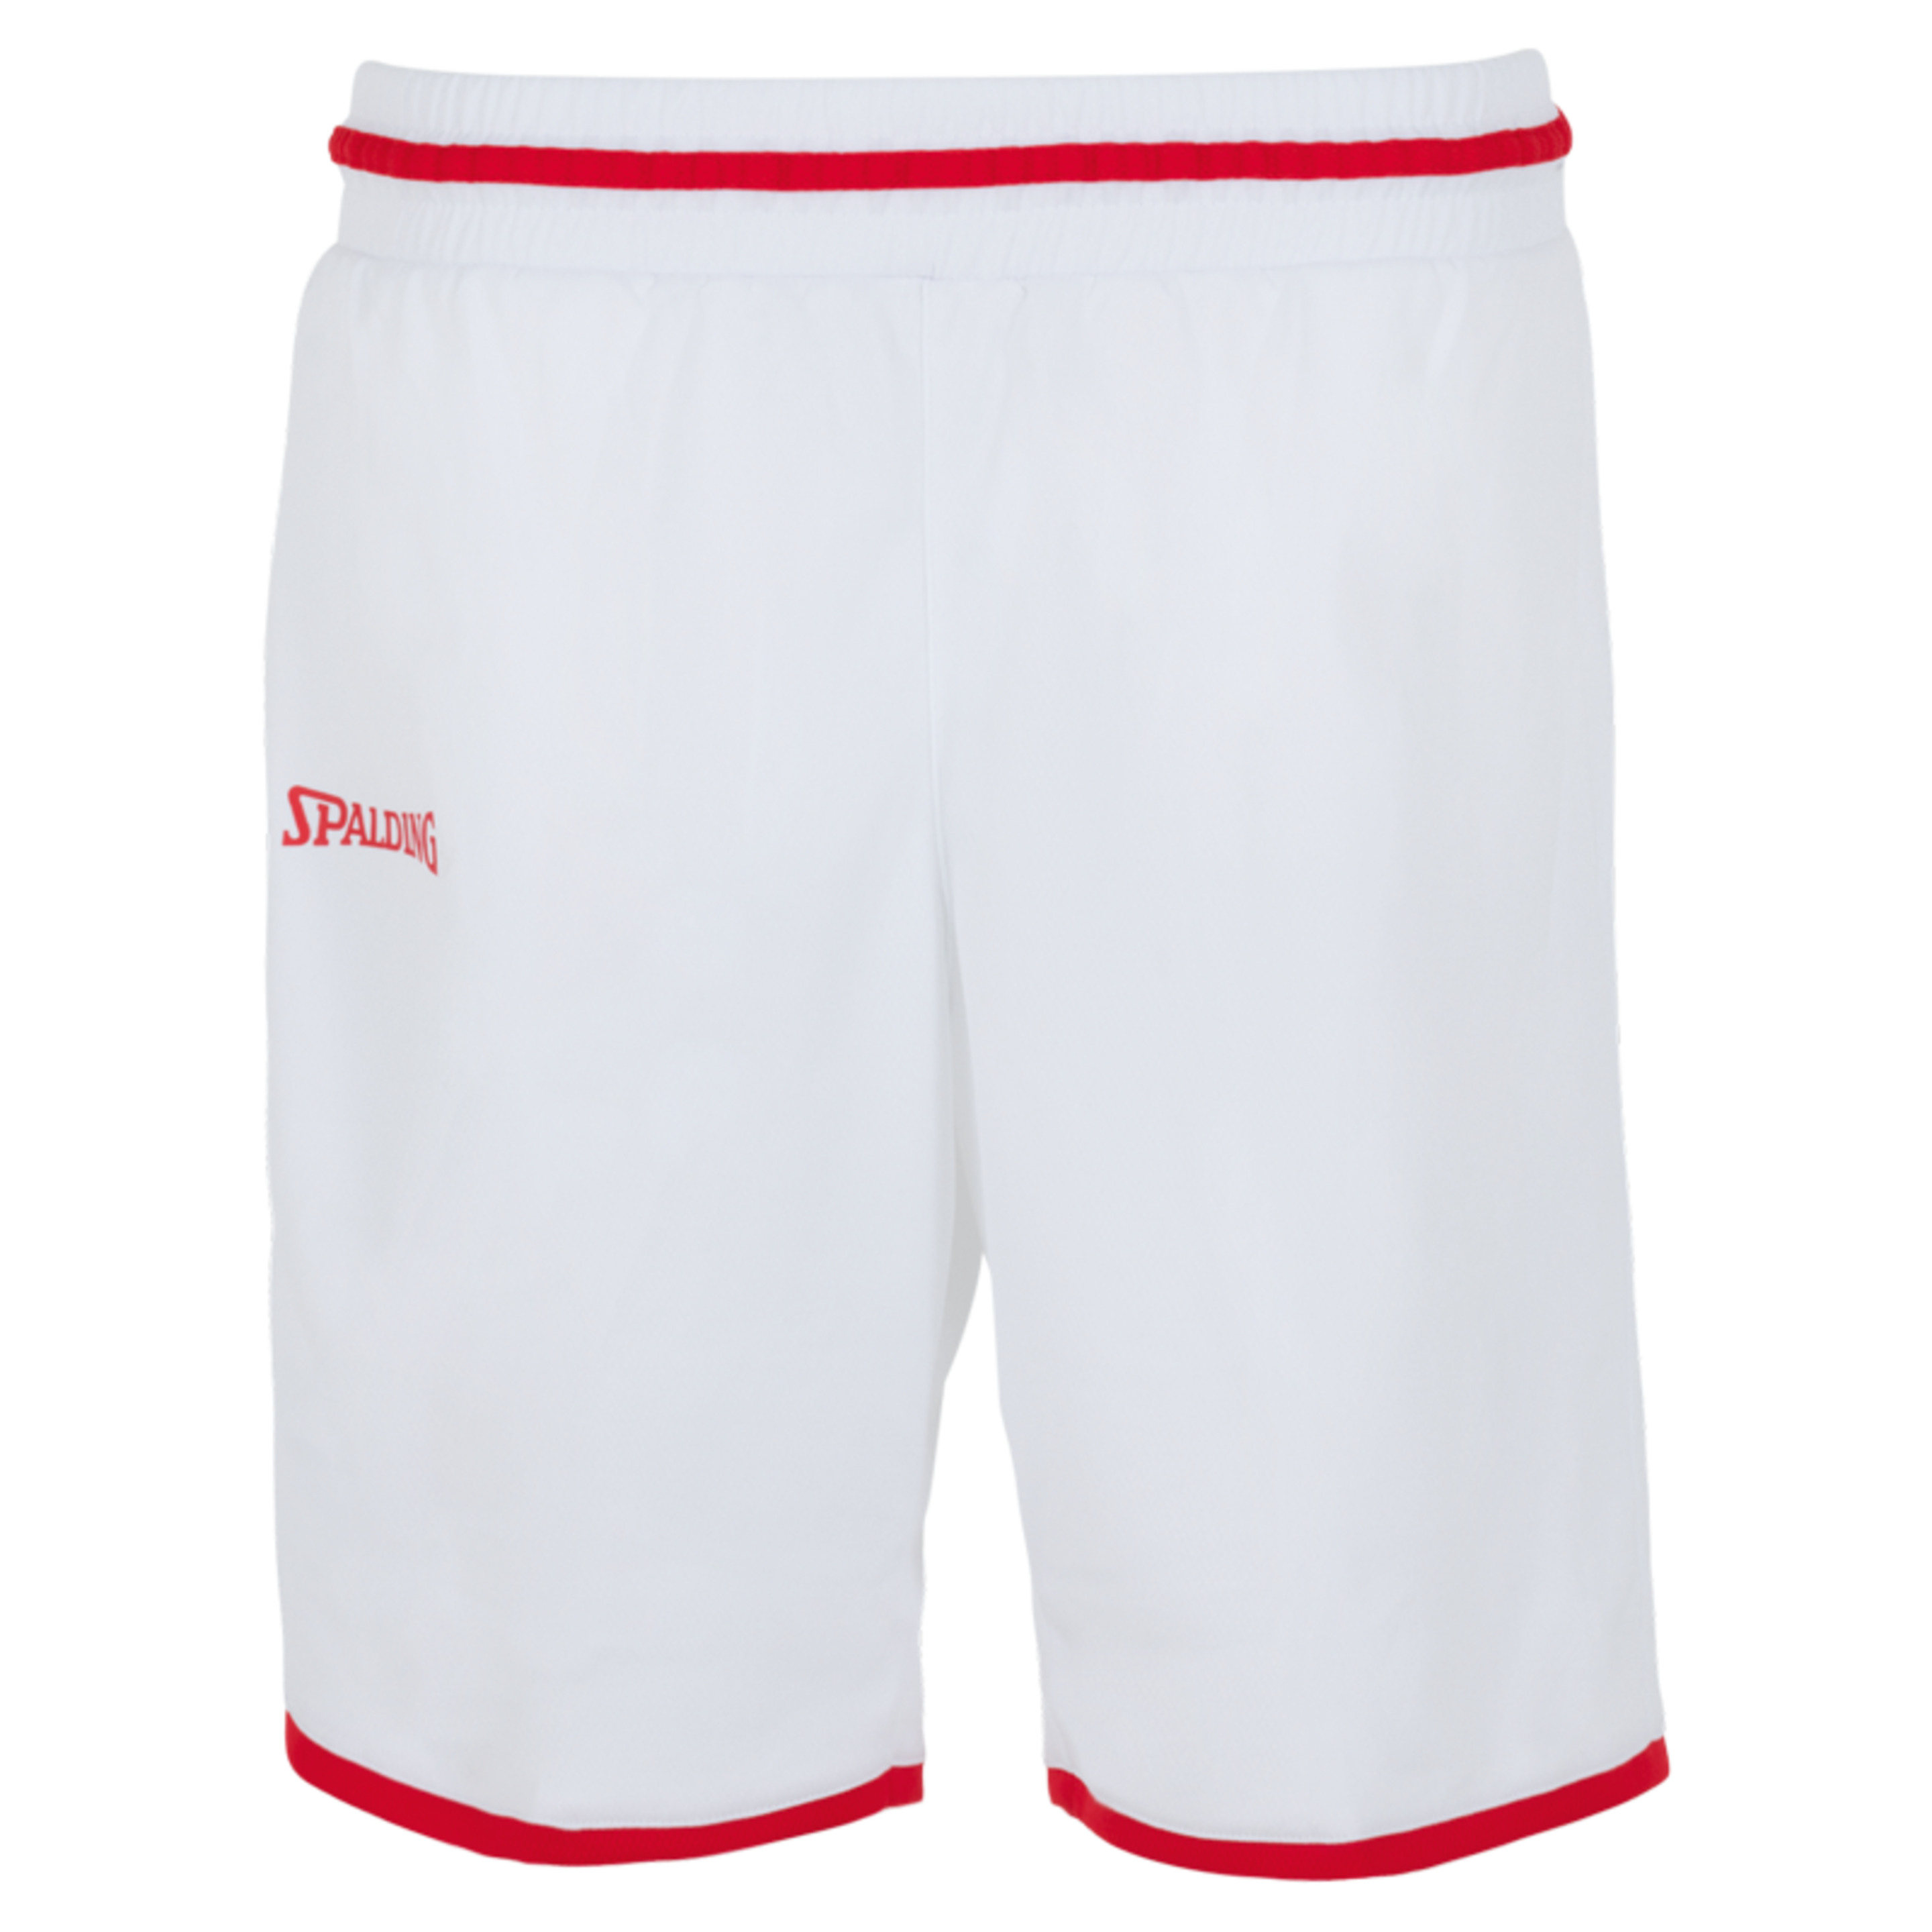 Move Shorts Women Blanco/rojo Spalding - blanco-rojo - 